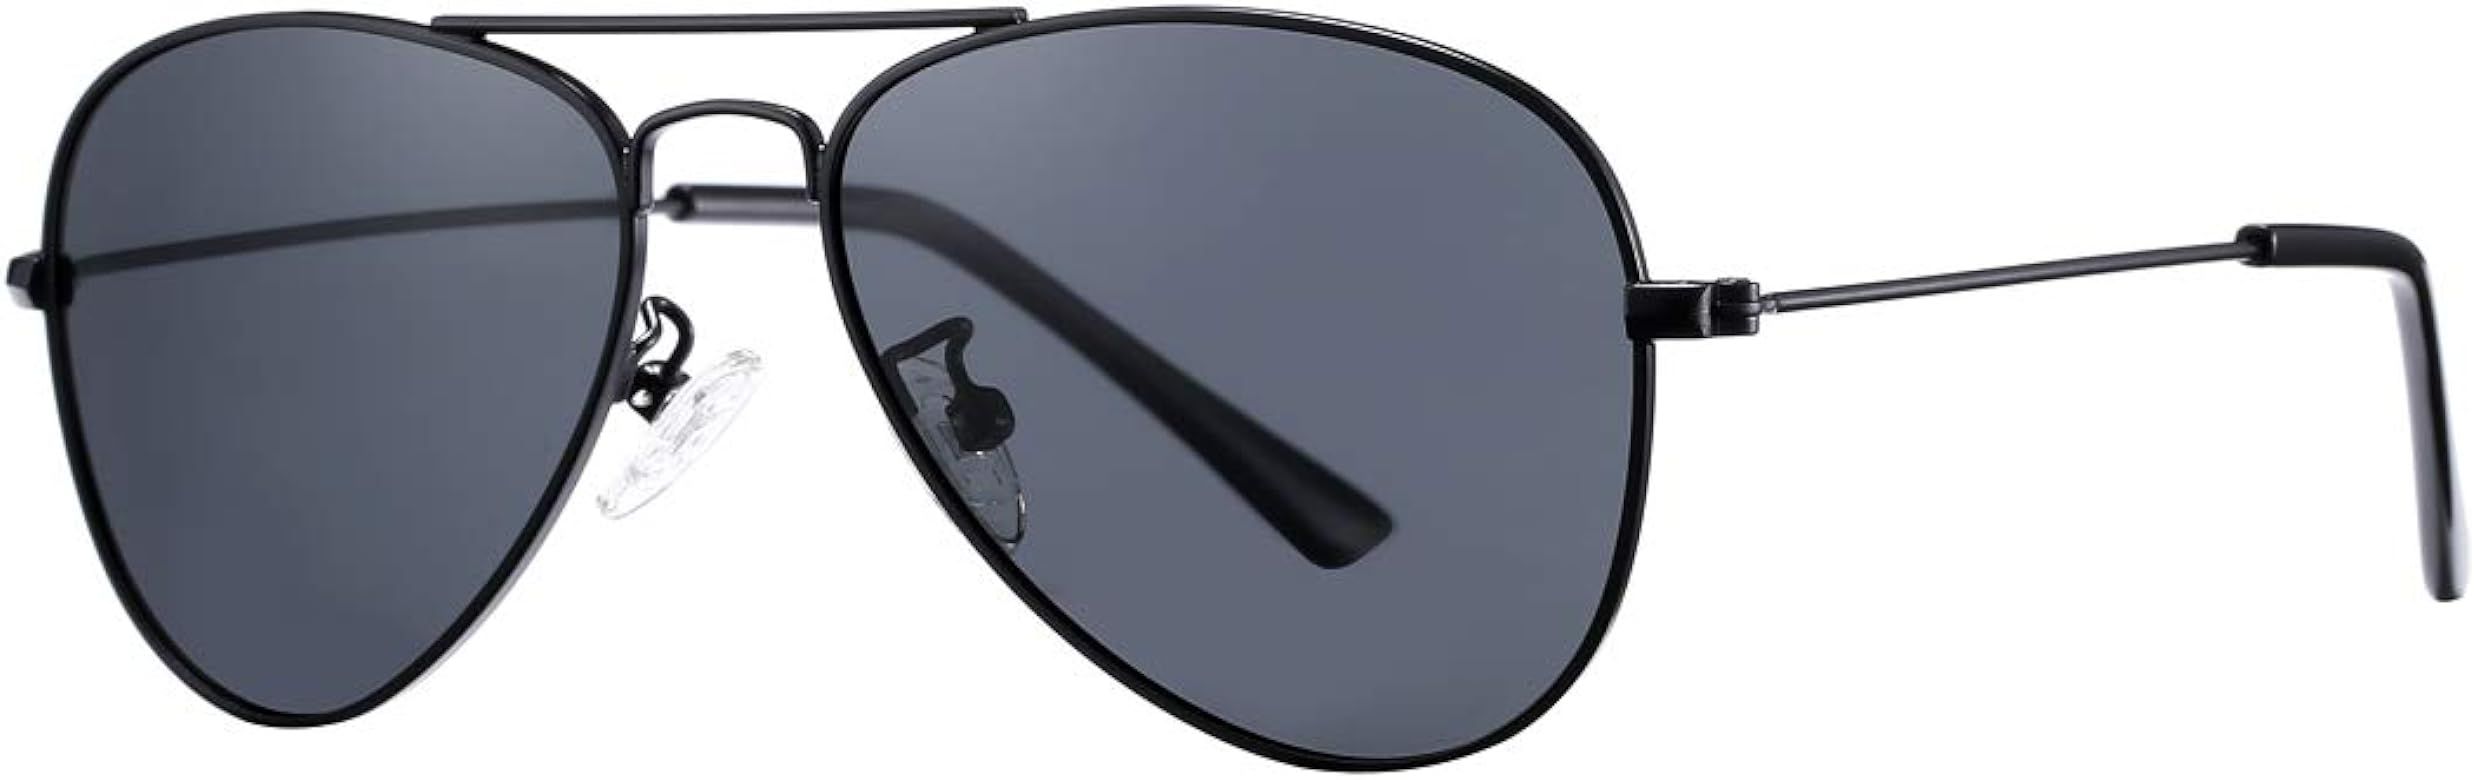 COASION Classic Polarized Small Aviator Sunglasses for Kids Baby Girls Boys Age 2-10 50MM | Amazon (US)